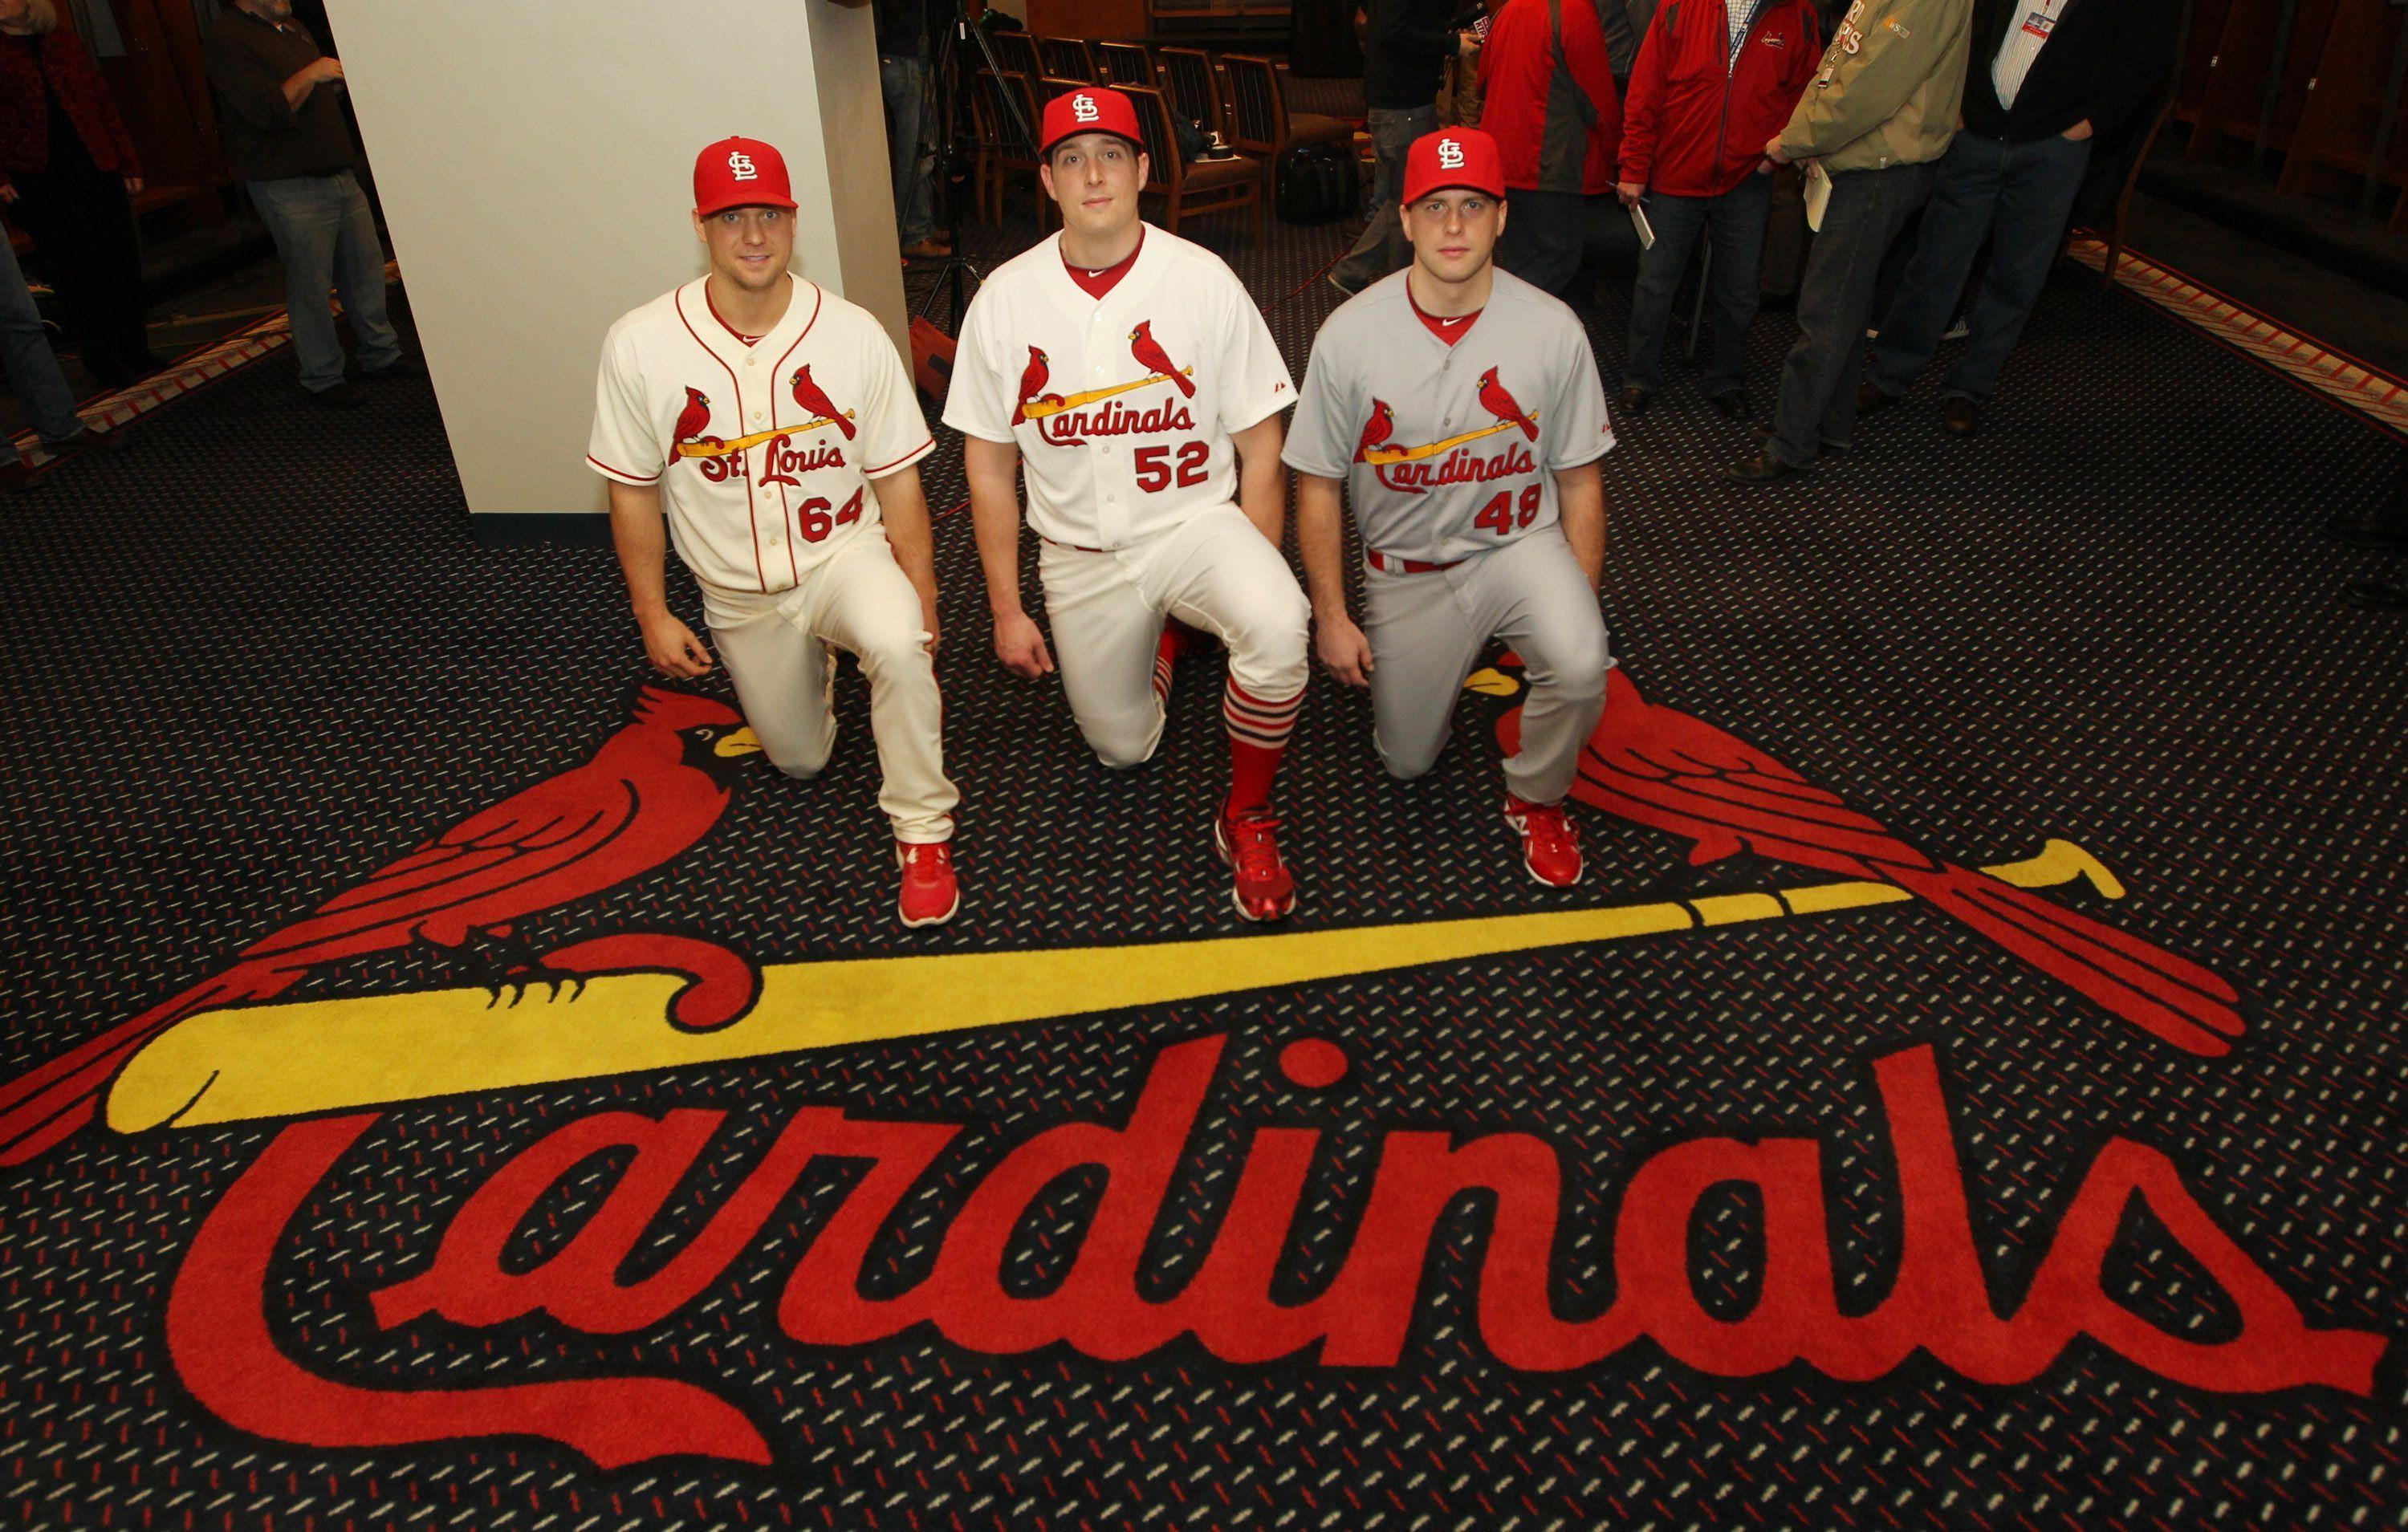 St. Louis Cardinals Wallpaper Image Photo Picture Background